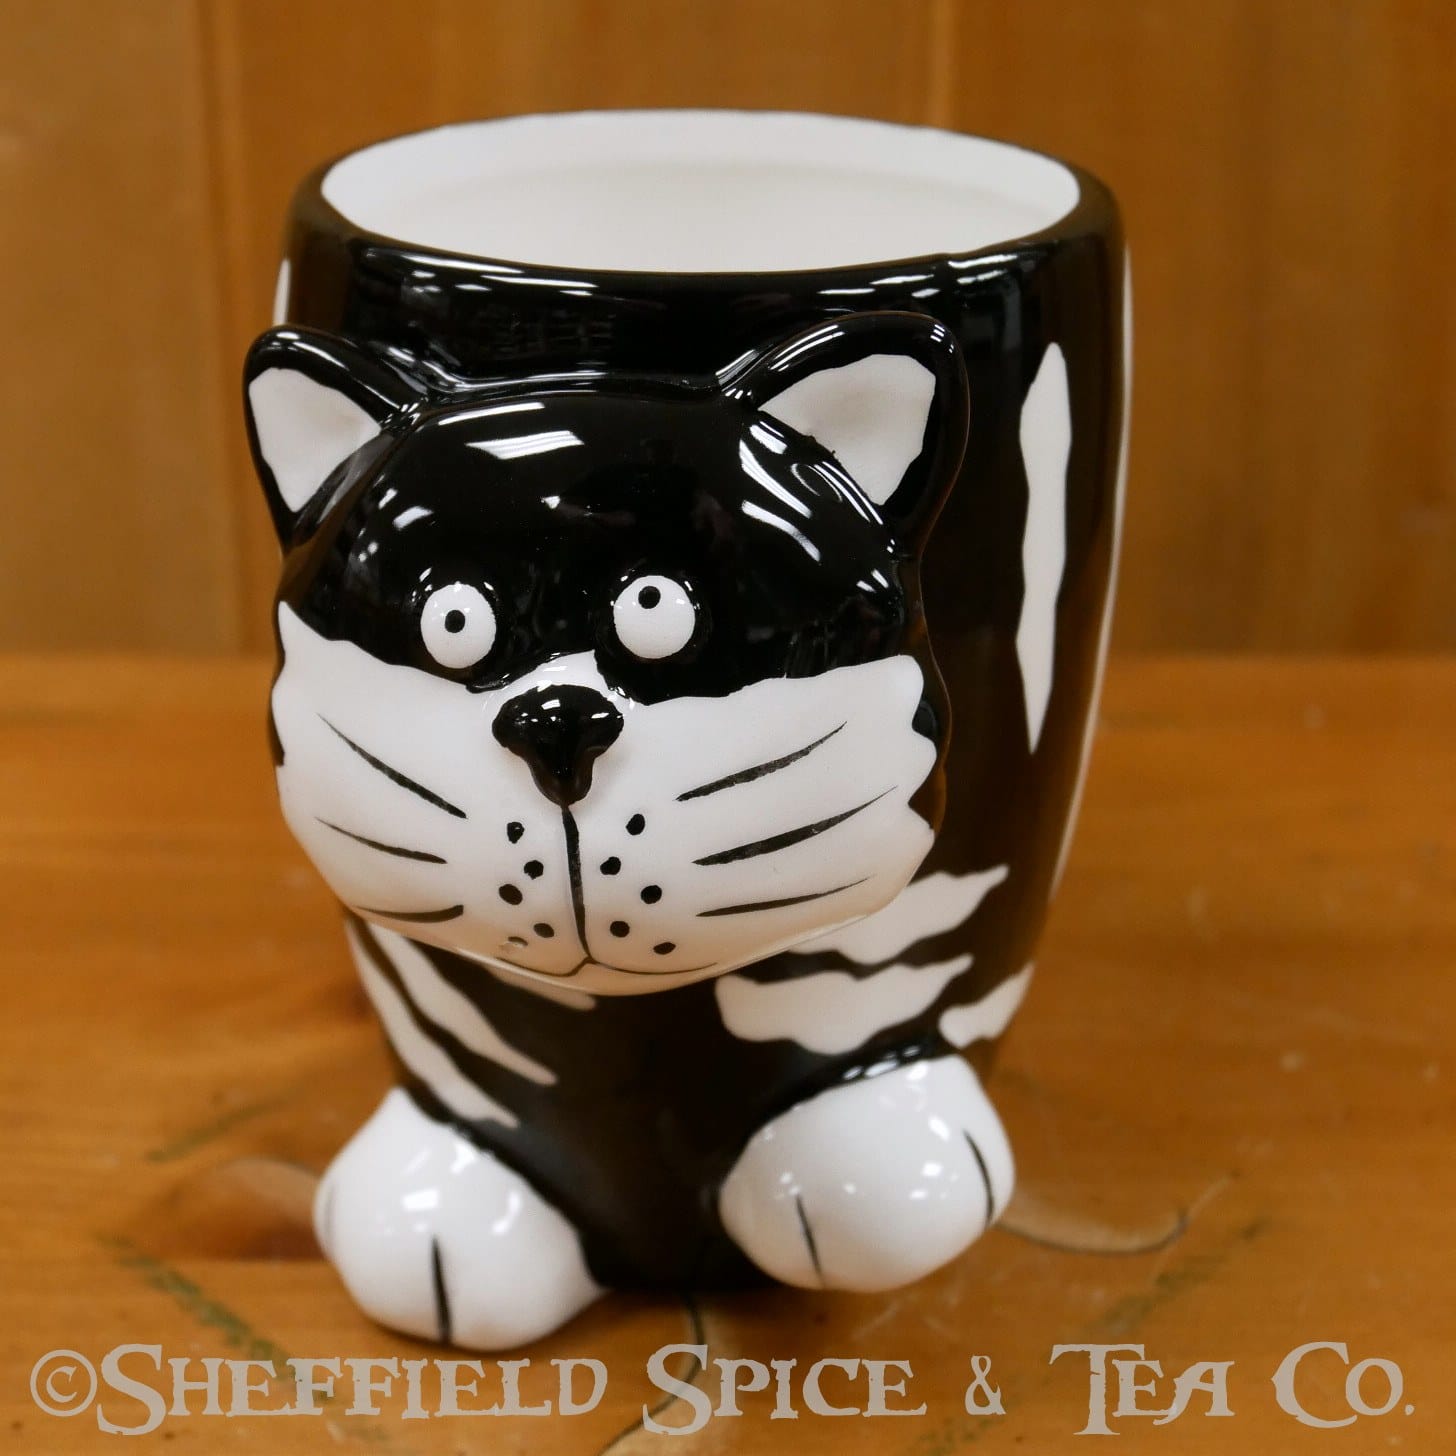 https://epjr3q9r9ms.exactdn.com/wp-content/uploads/2021/10/chester-the-cat-tea-cup-image.jpg?strip=all&lossy=1&ssl=1